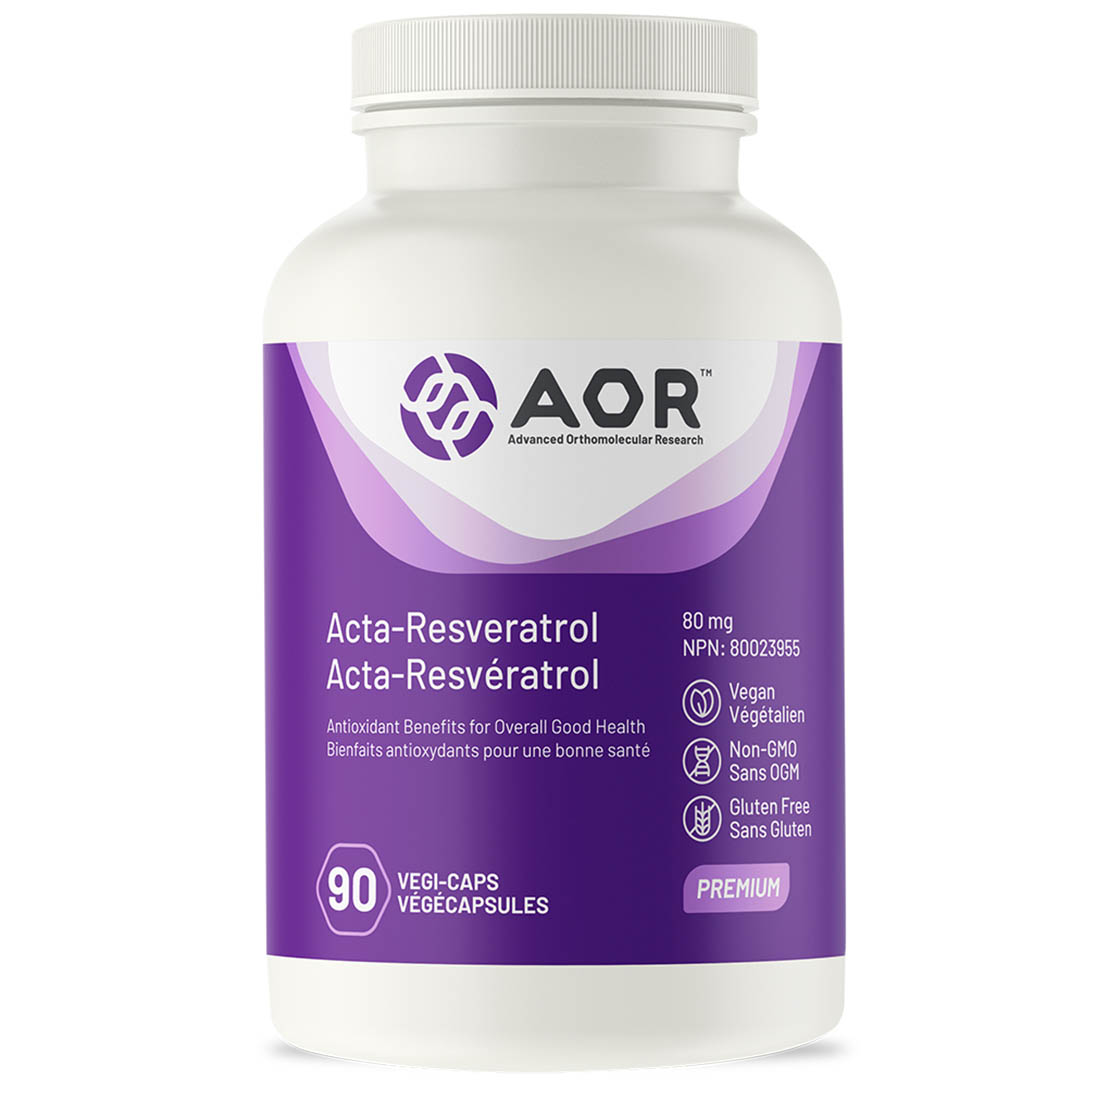 AOR Acta-Resveratrol, 80mg, 90 Vegi-Capsules